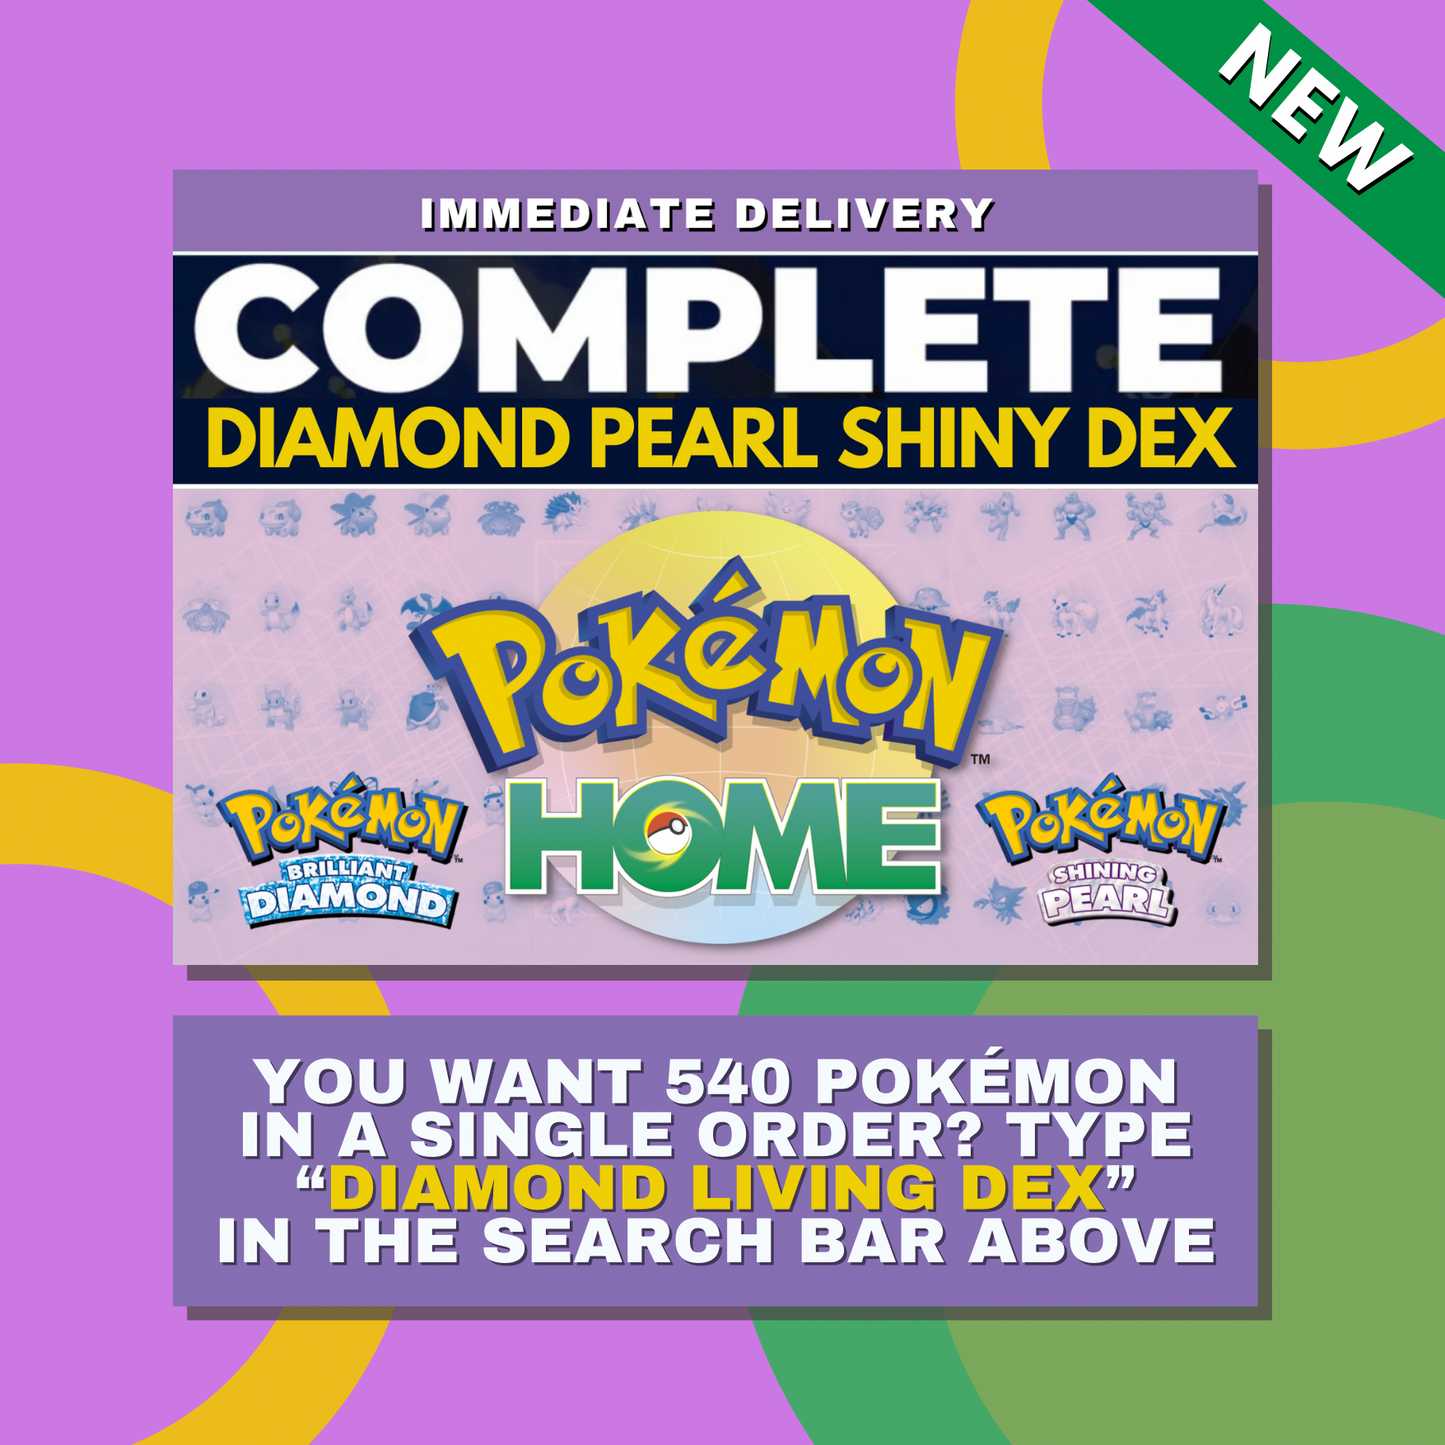 Yanmega Shiny ✨ or Non Shiny Pokémon Brilliant Diamond Shining Pearl Battle Ready 6 IV Competitive 100% Legit Level 100 Customizable Custom OT by Shiny Living Dex | Shiny Living Dex